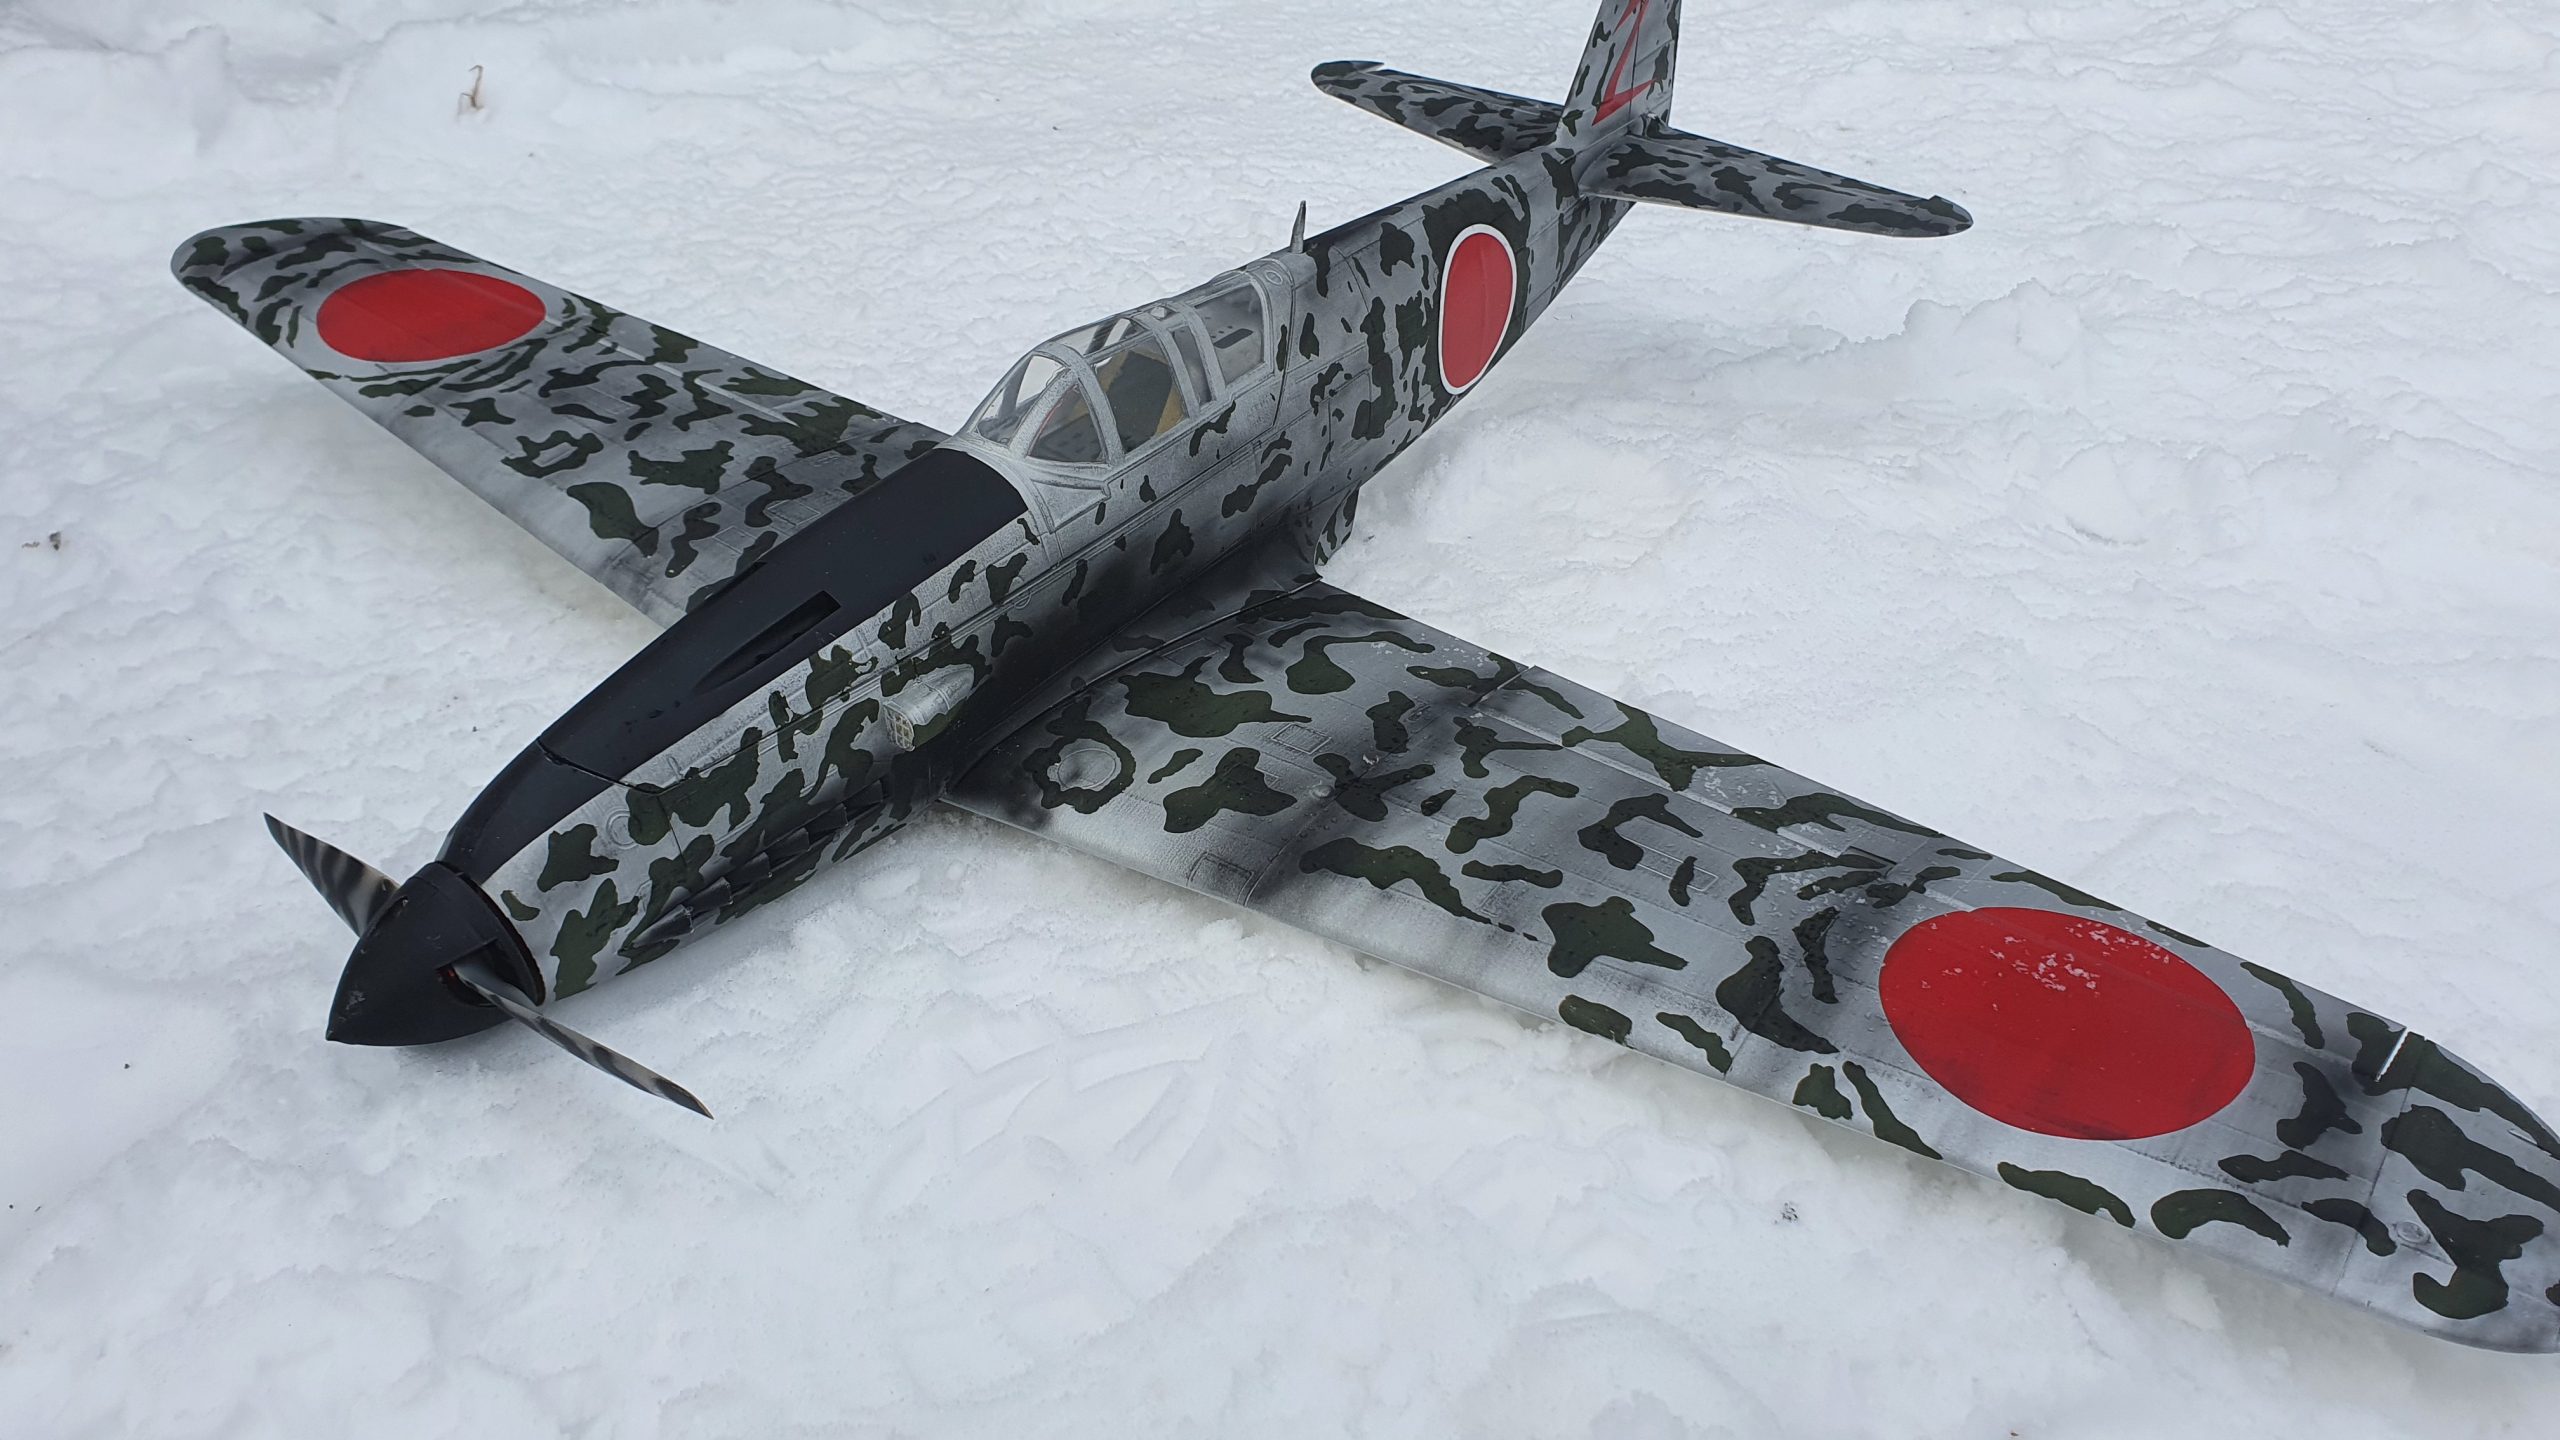 Kawasaki Ki-61 Wallpapers